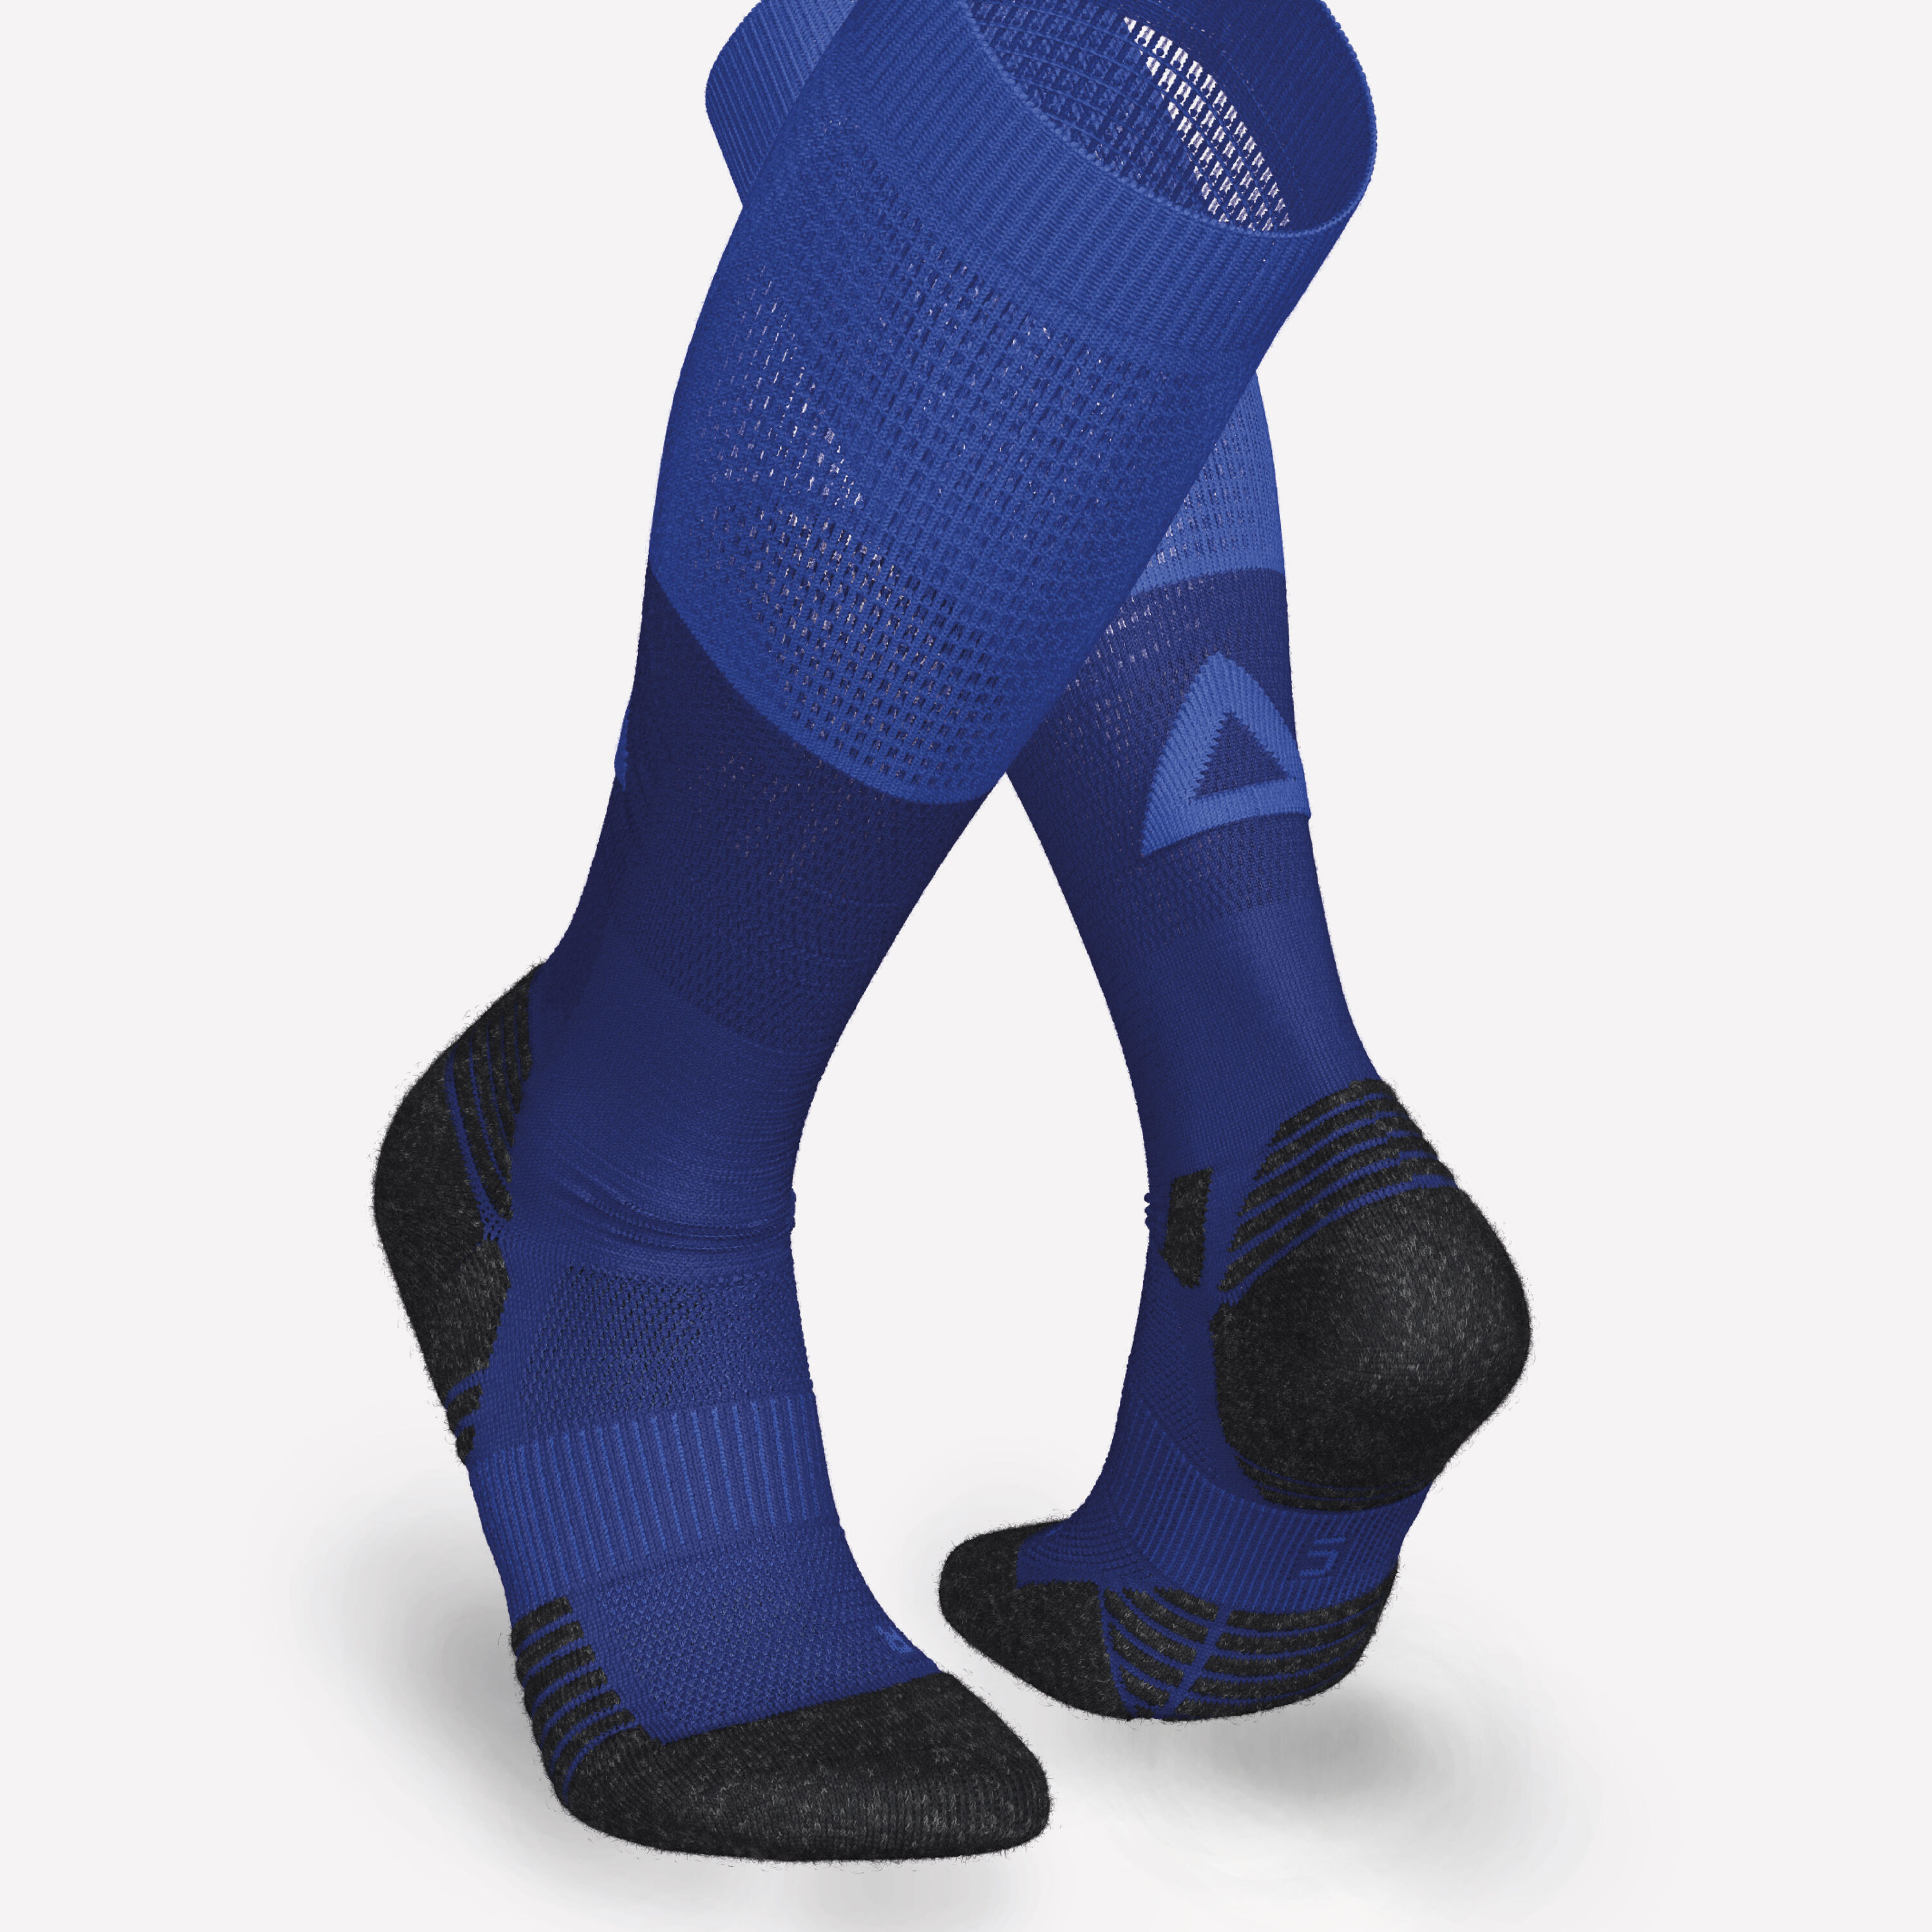 Calf Compression Sleeves For Women & Men (Unisex) Leg & Shin Splints Support  - Running Cycling Gym Travel Flight S-M Black